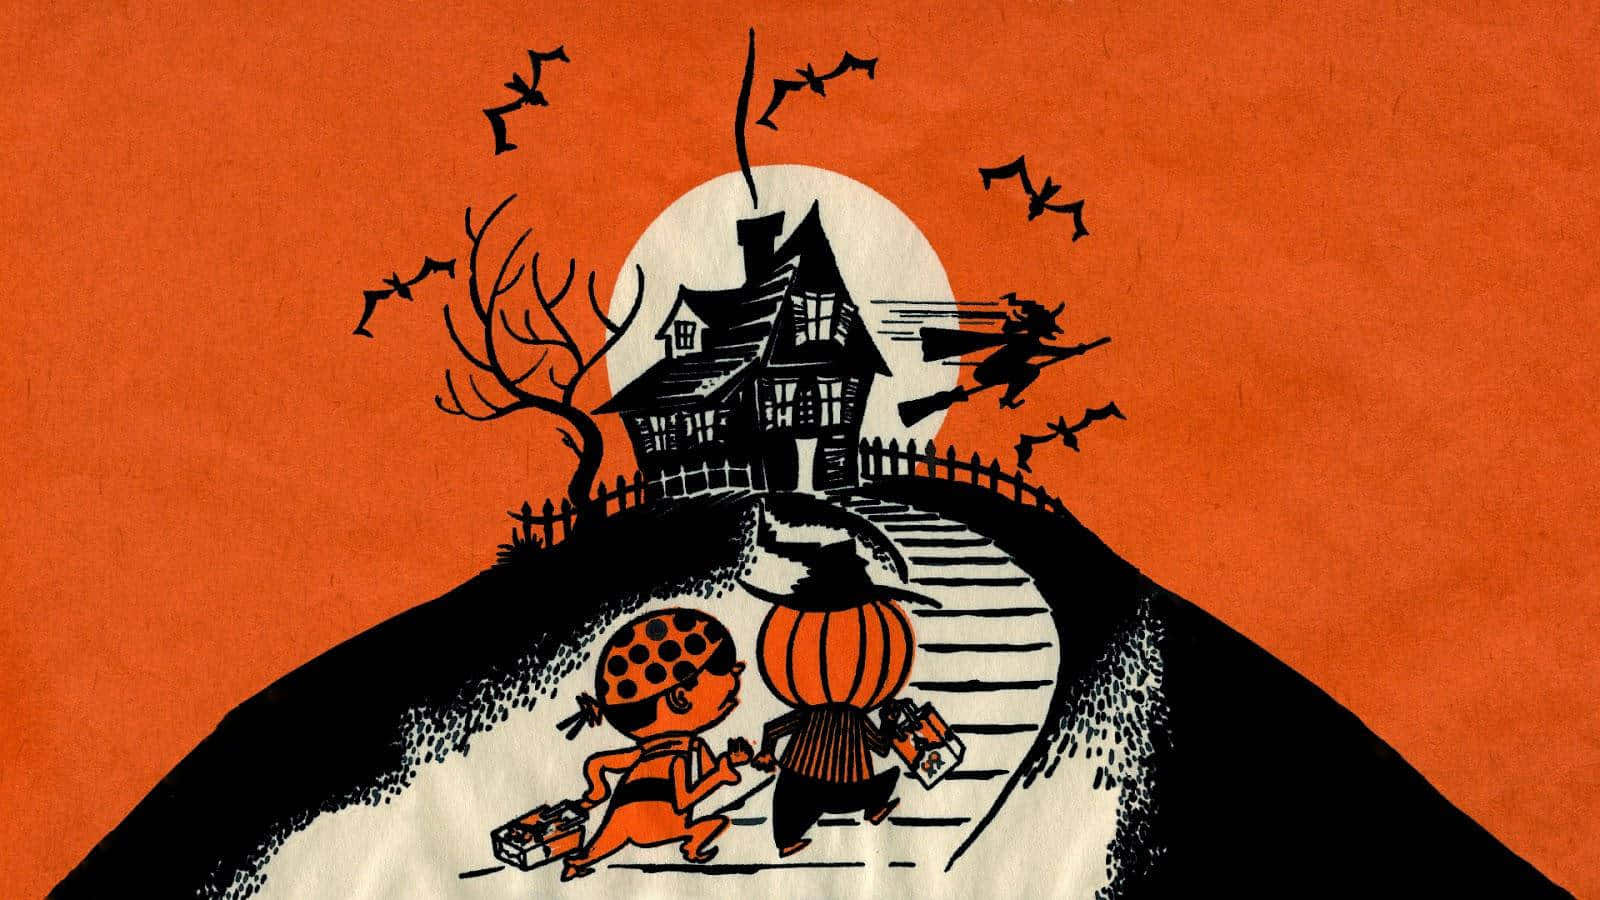 Vintage Halloween Kids Trickor Treating Wallpaper